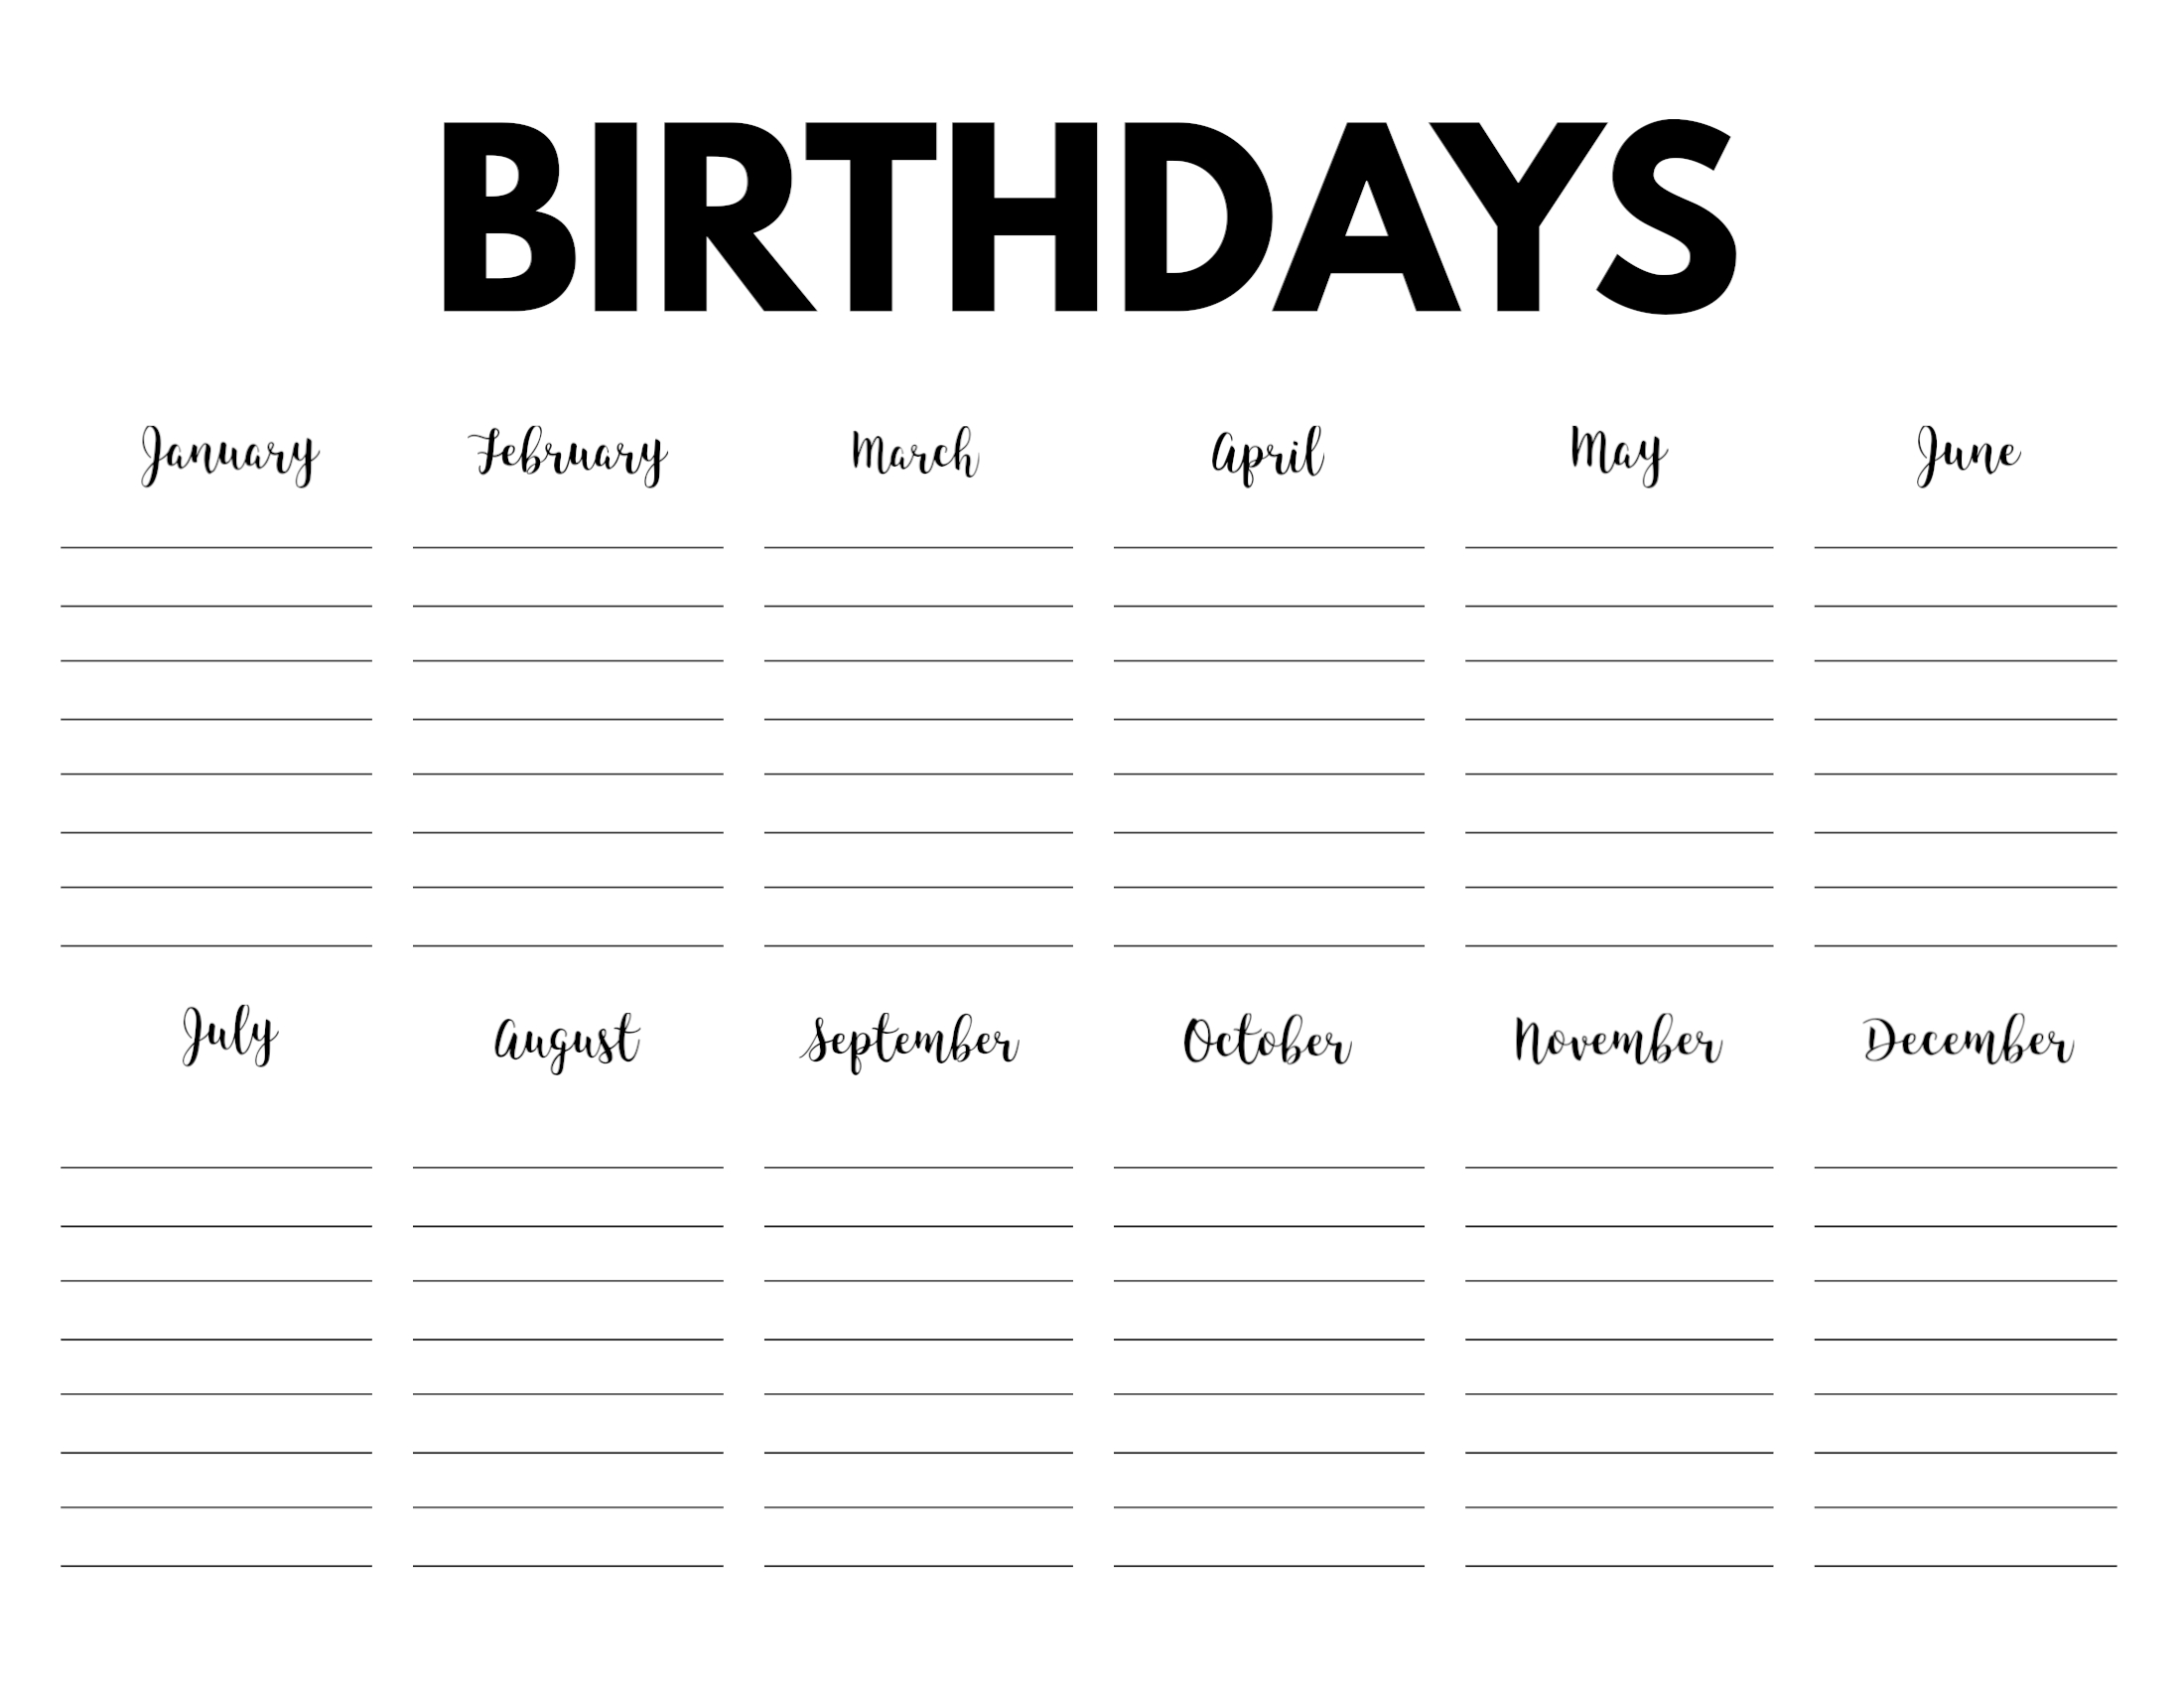 Template : Birthday Calendars Free Printable Microsoft Word with Microsoft Birthday Calendar Template